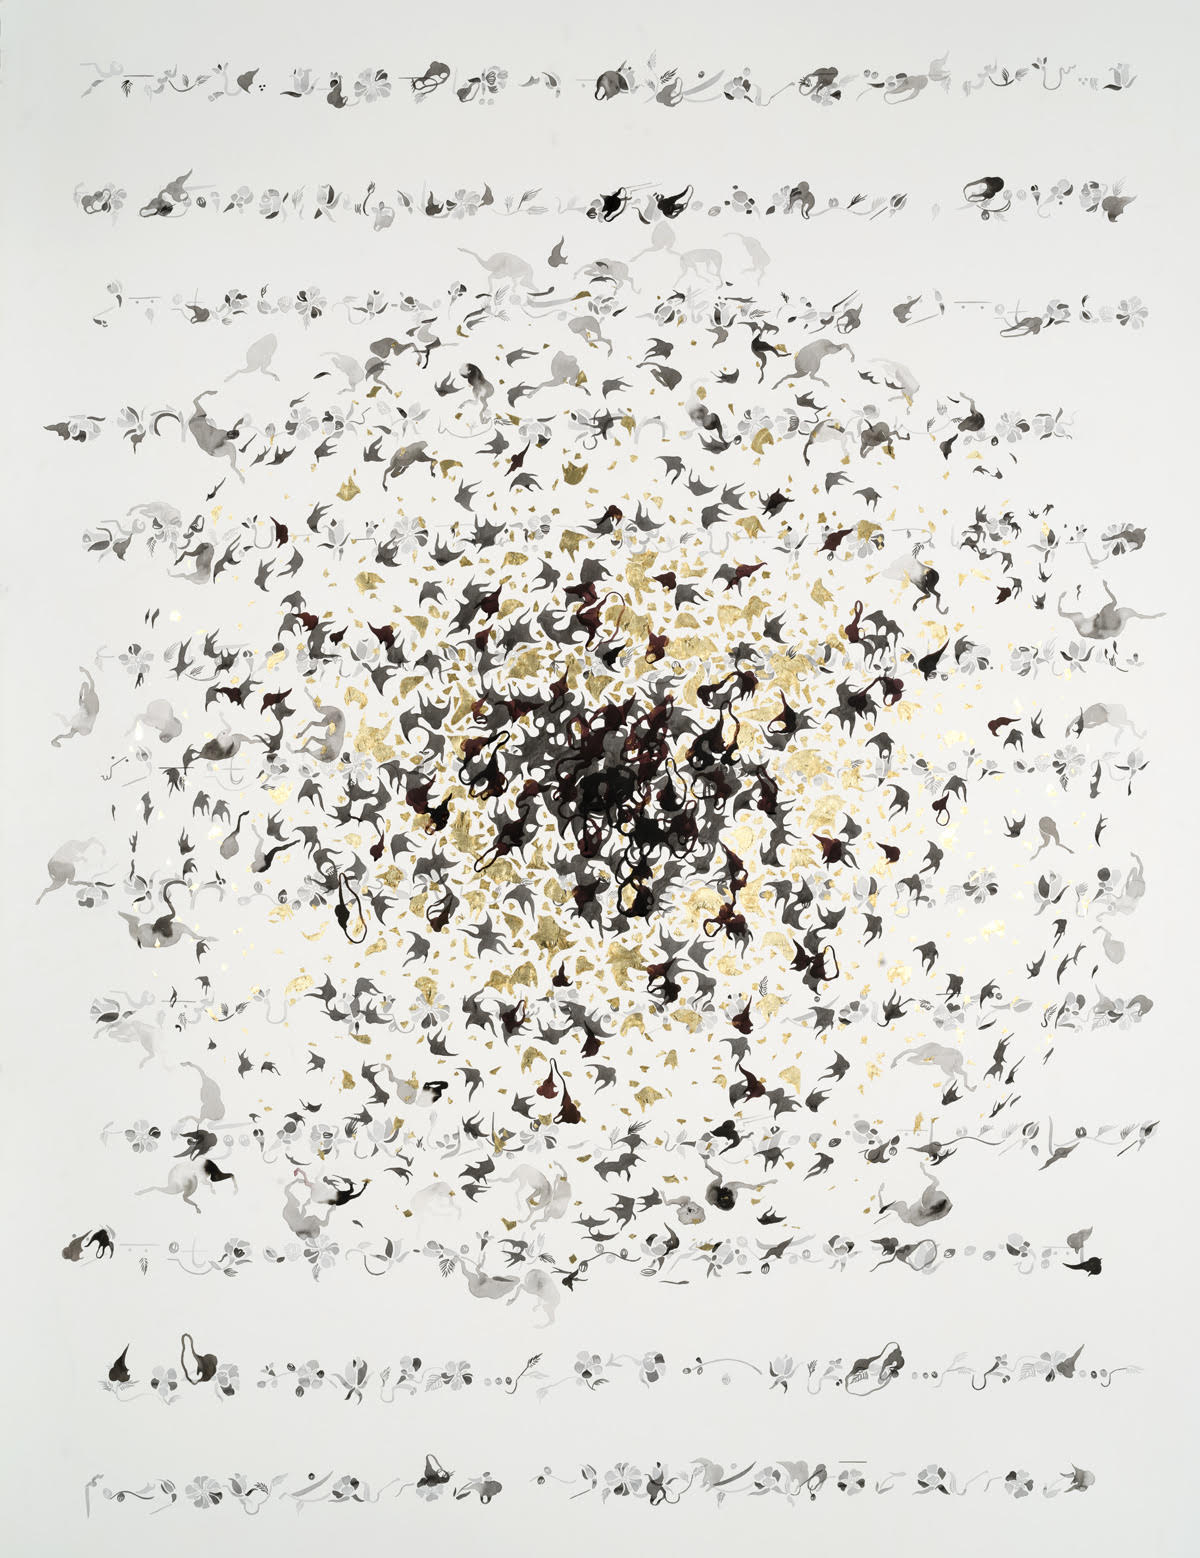 "Singing in sphere" 2015, tecnica mista su carta, 244 x 164 cm